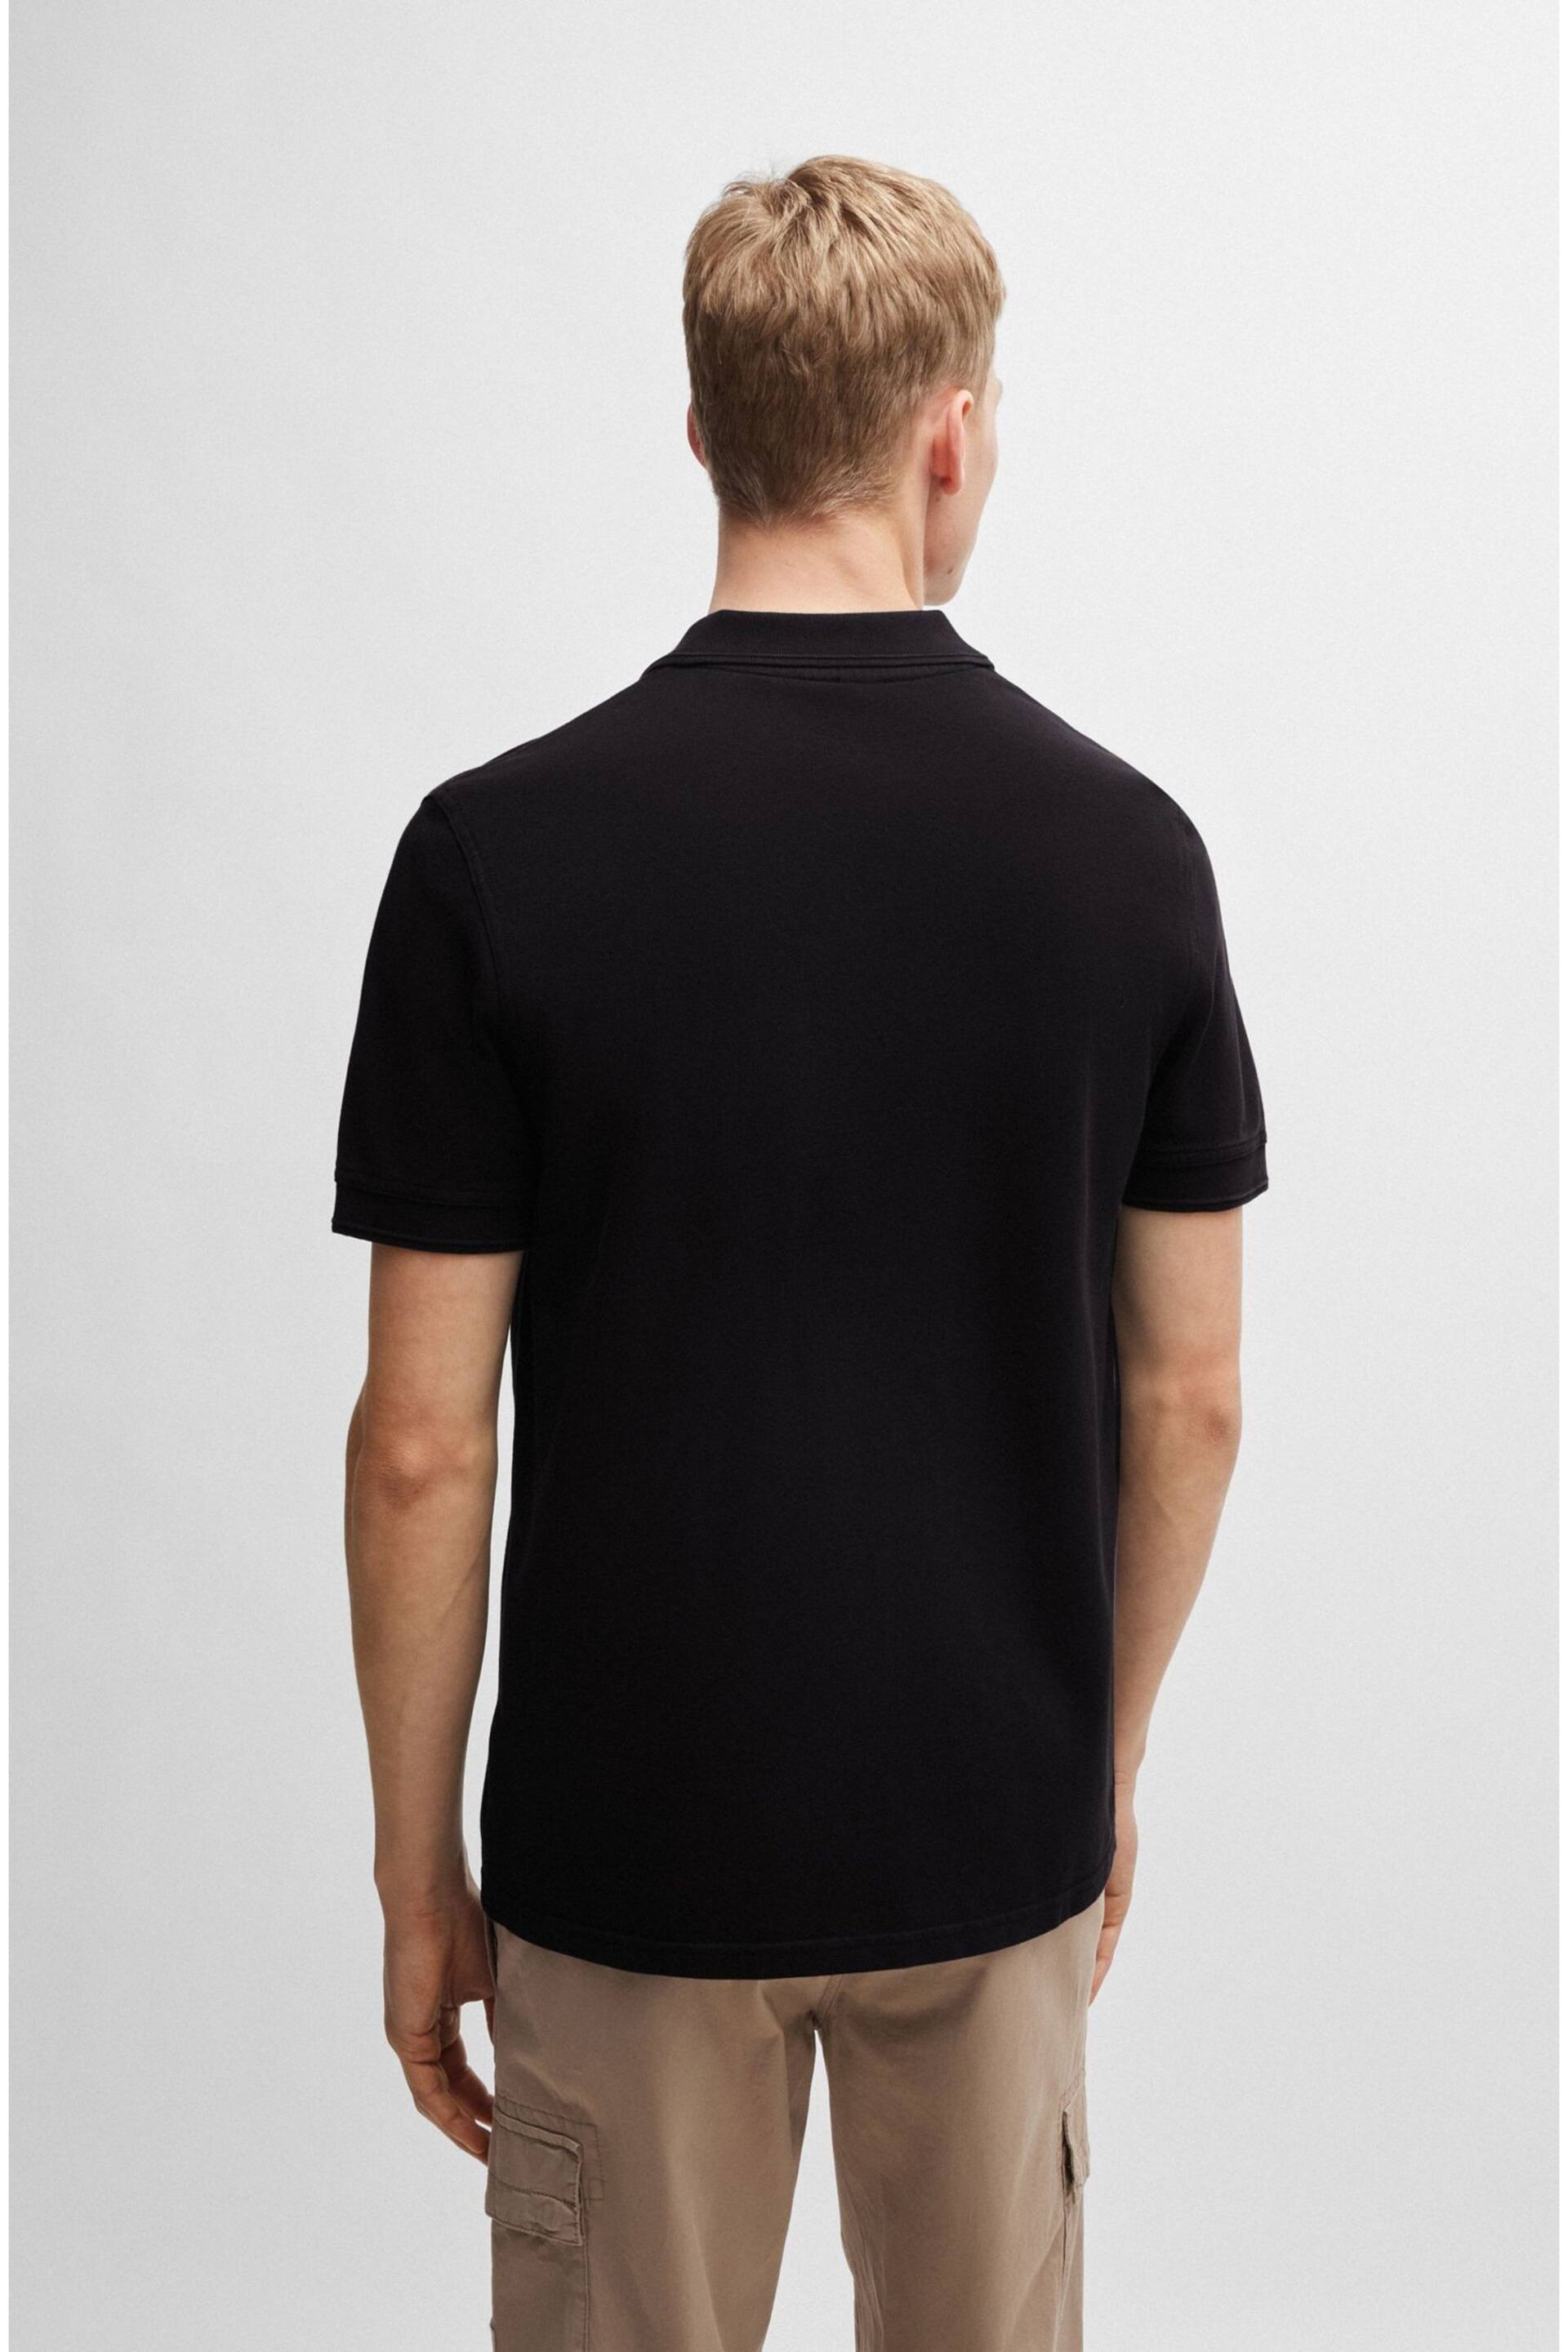 BOSS Black Cotton Pique Polo Shirt - Image 2 of 5